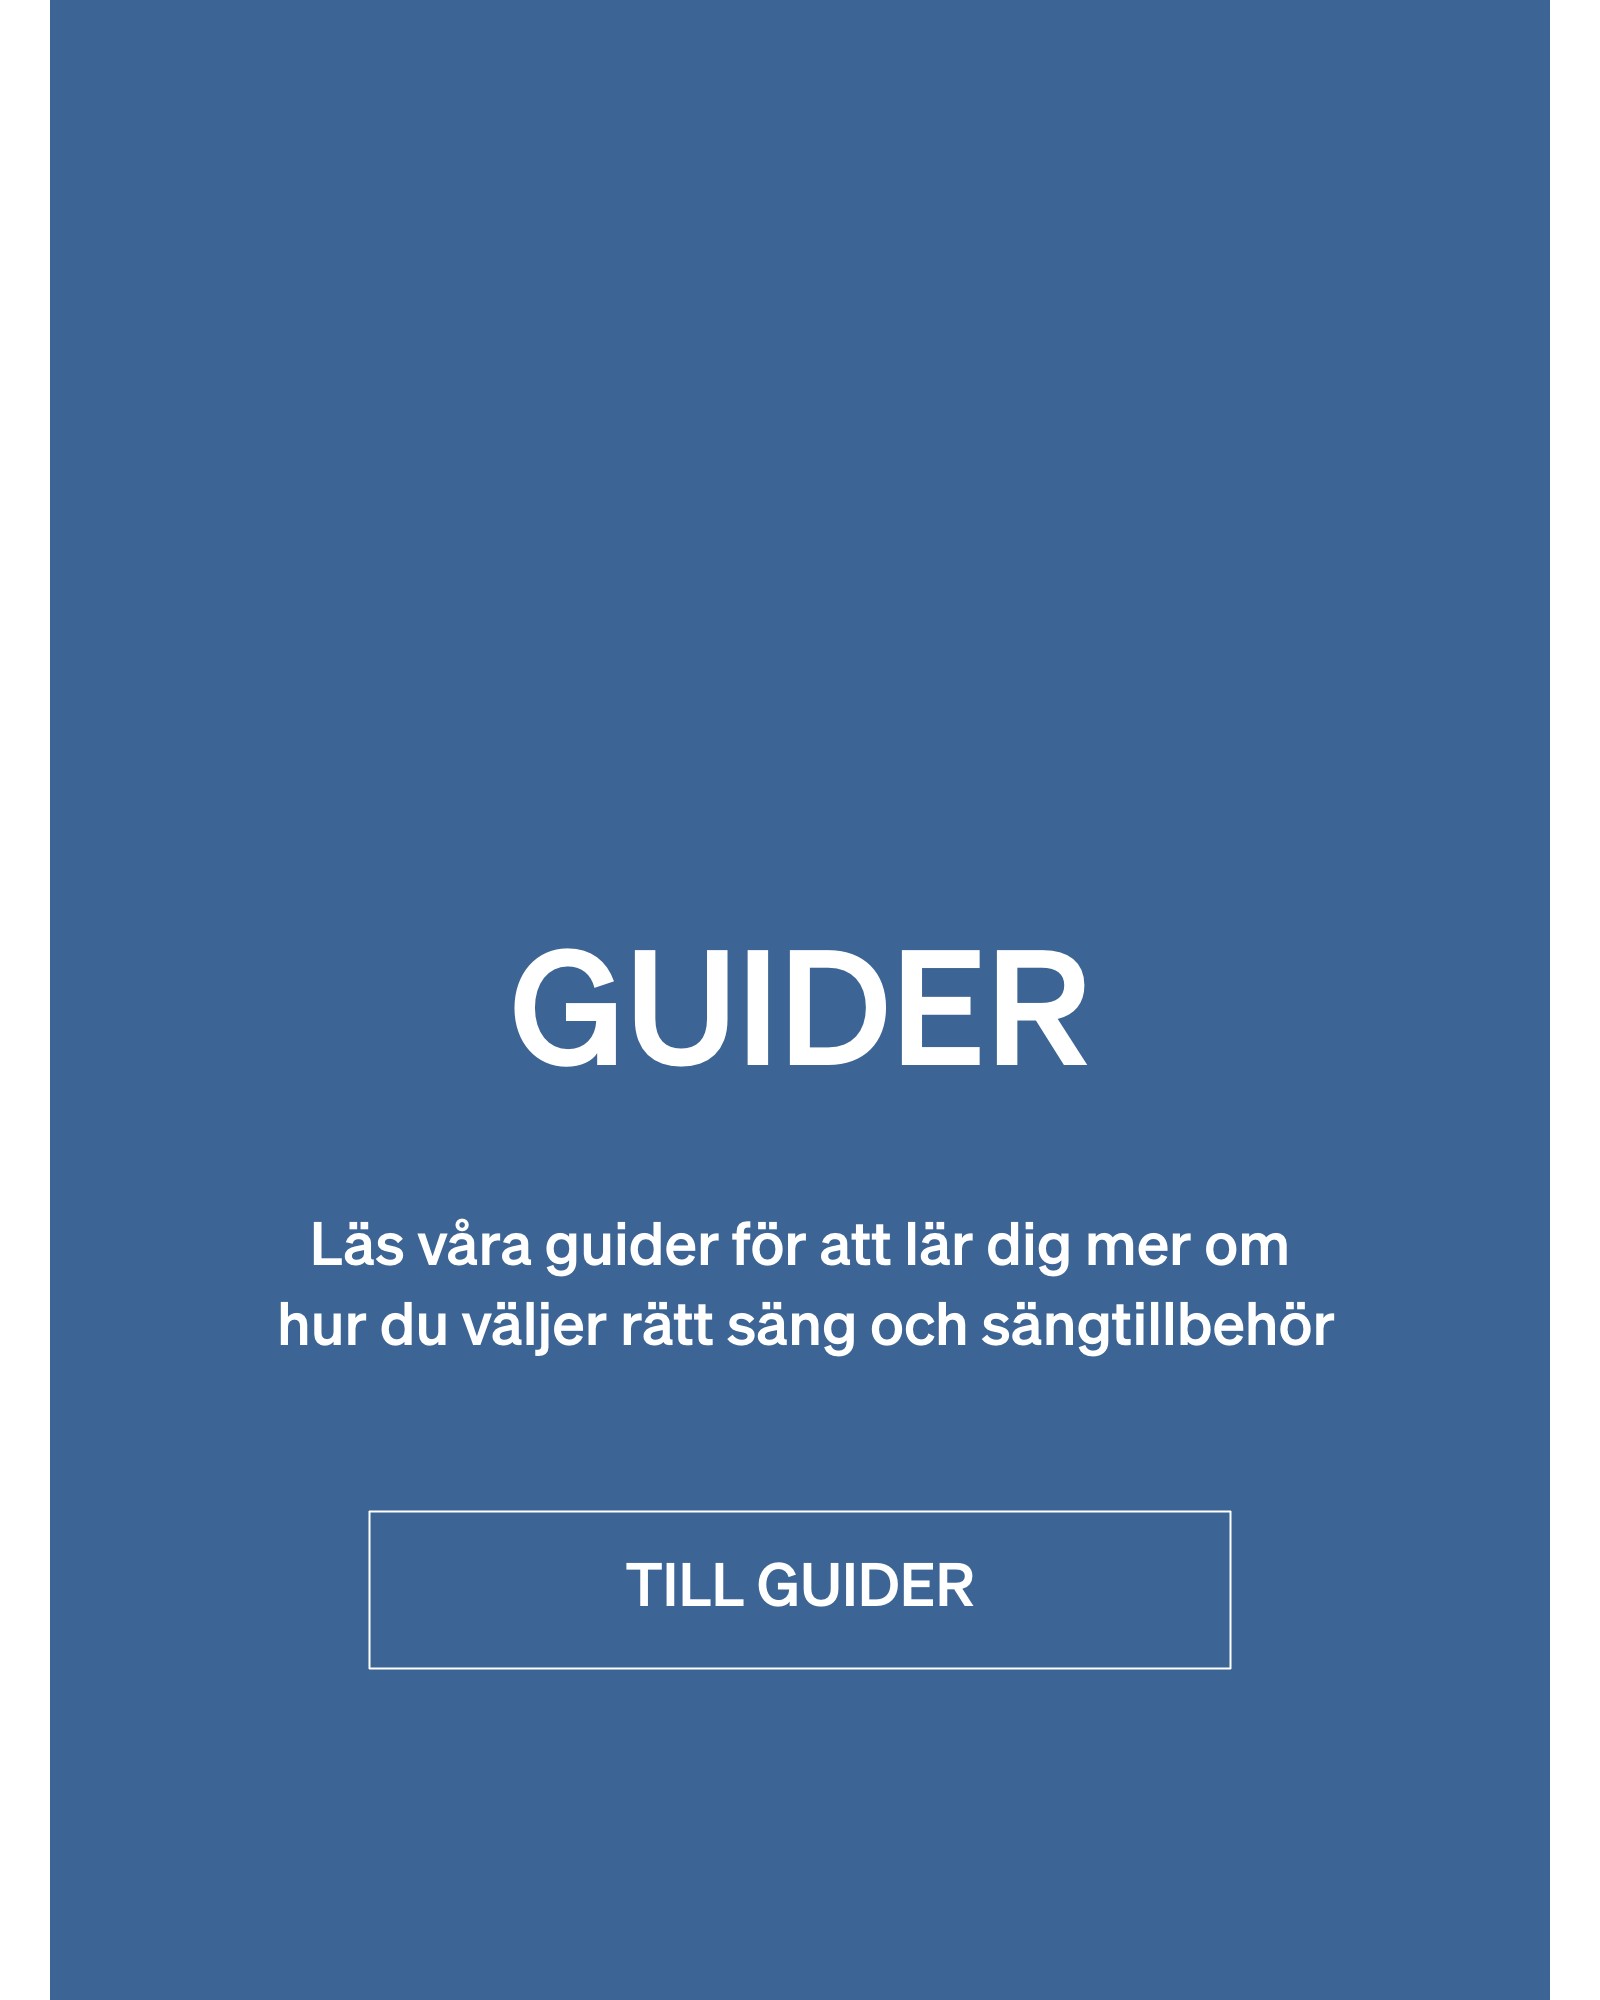 Guider.jpg